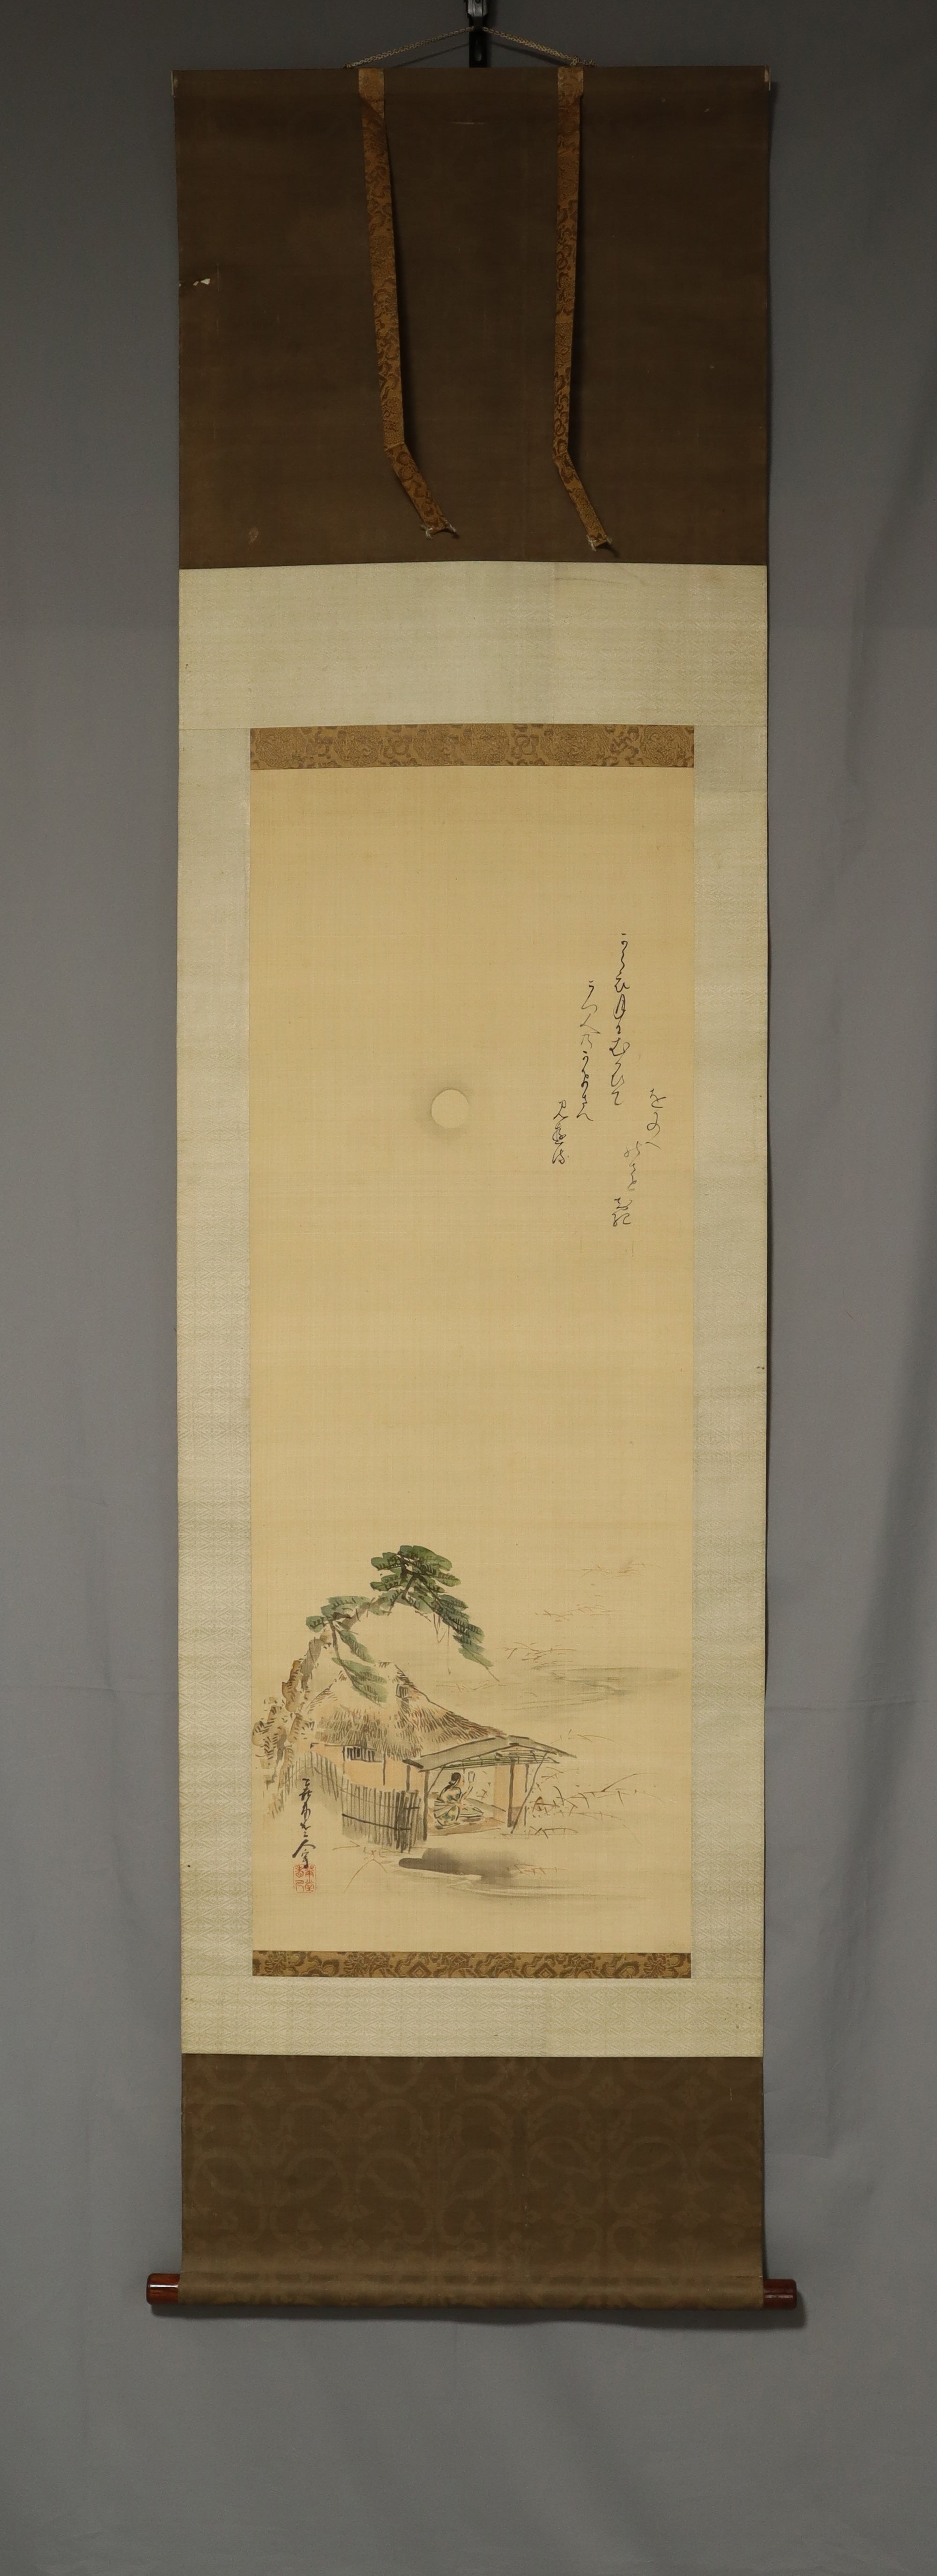 Kida Kado（1802-1879），Hatta Tomonori（1799-1873）“ Kinuta（木制的木制饰物）合作”，晚期Edo时期 - 米吉时代